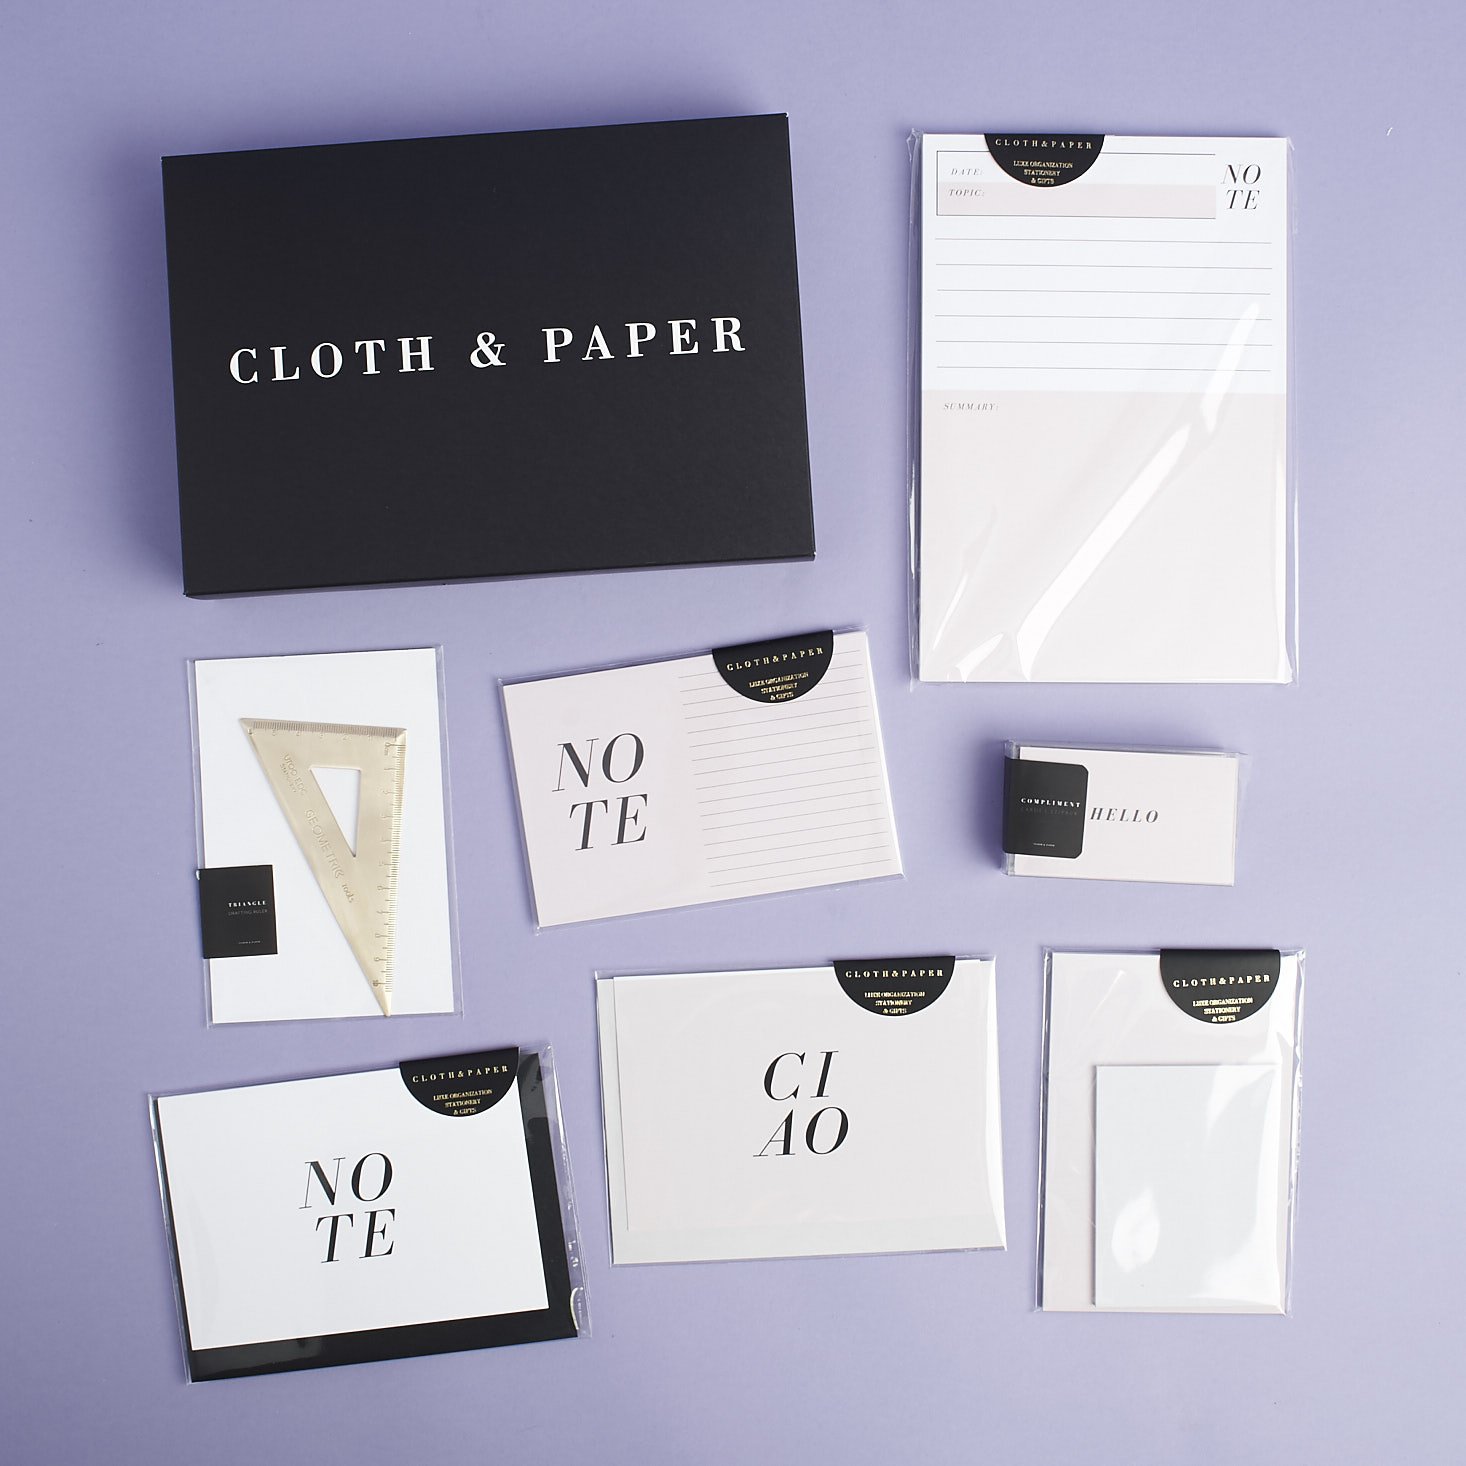 Cloth & Paper October 2021 Spoiler #1 + Coupon